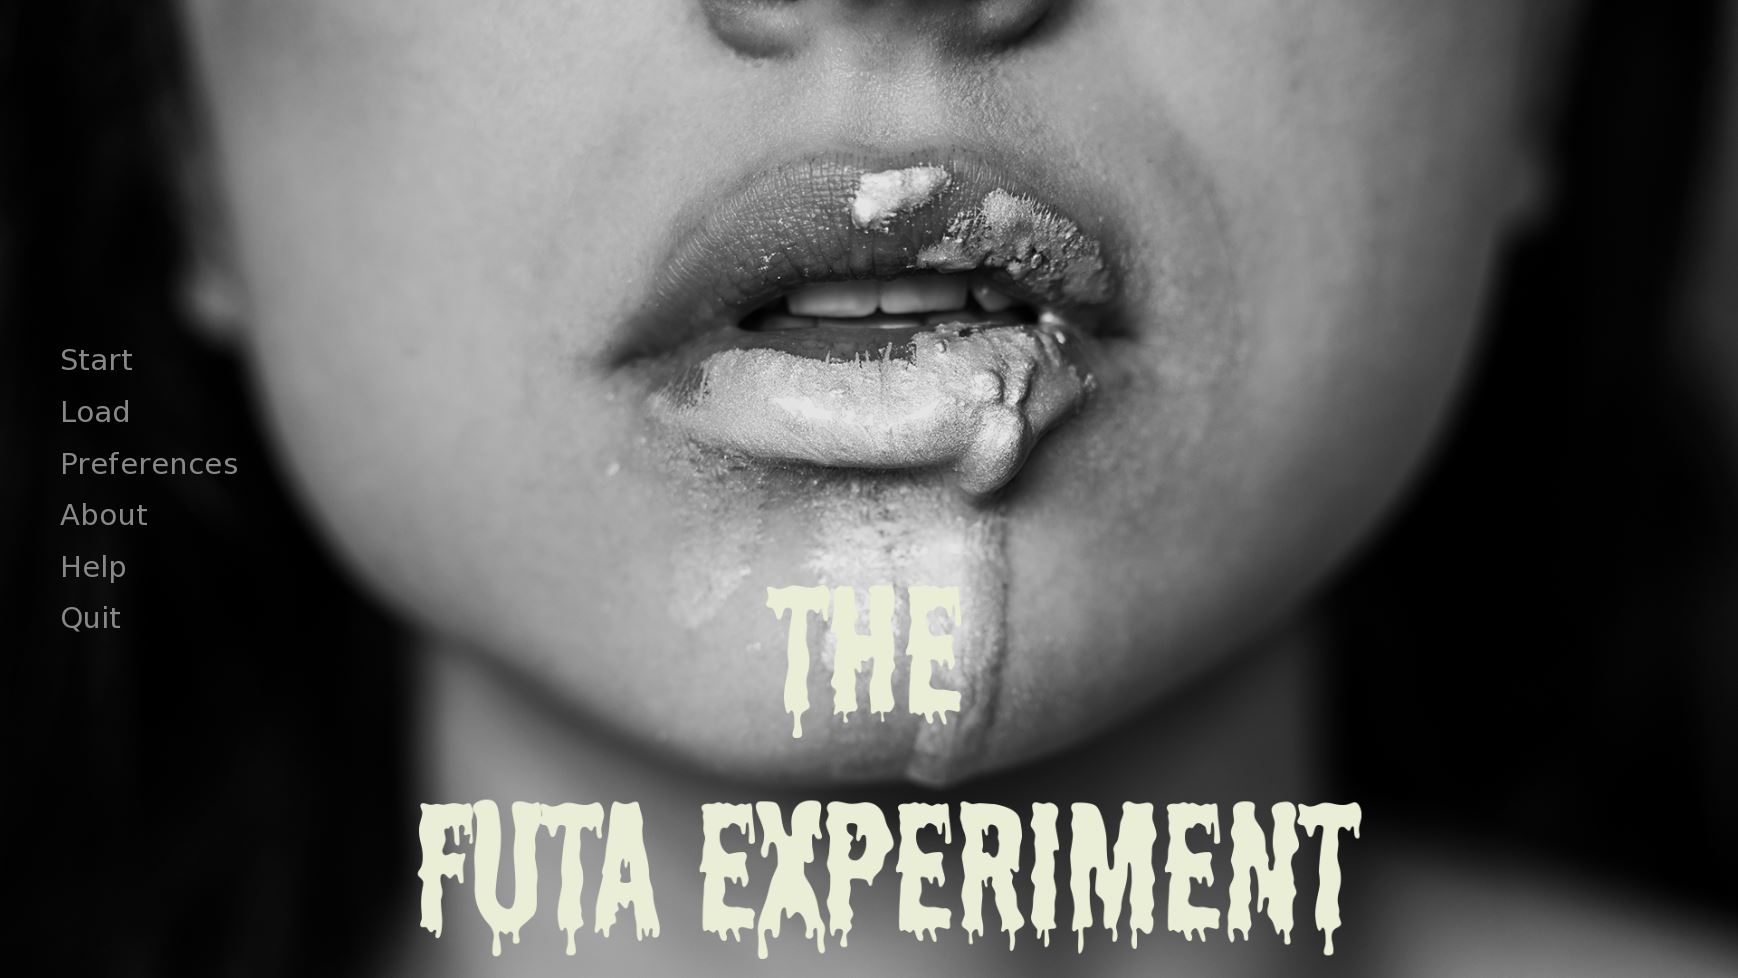 The Futa Experiment porn xxx game download cover